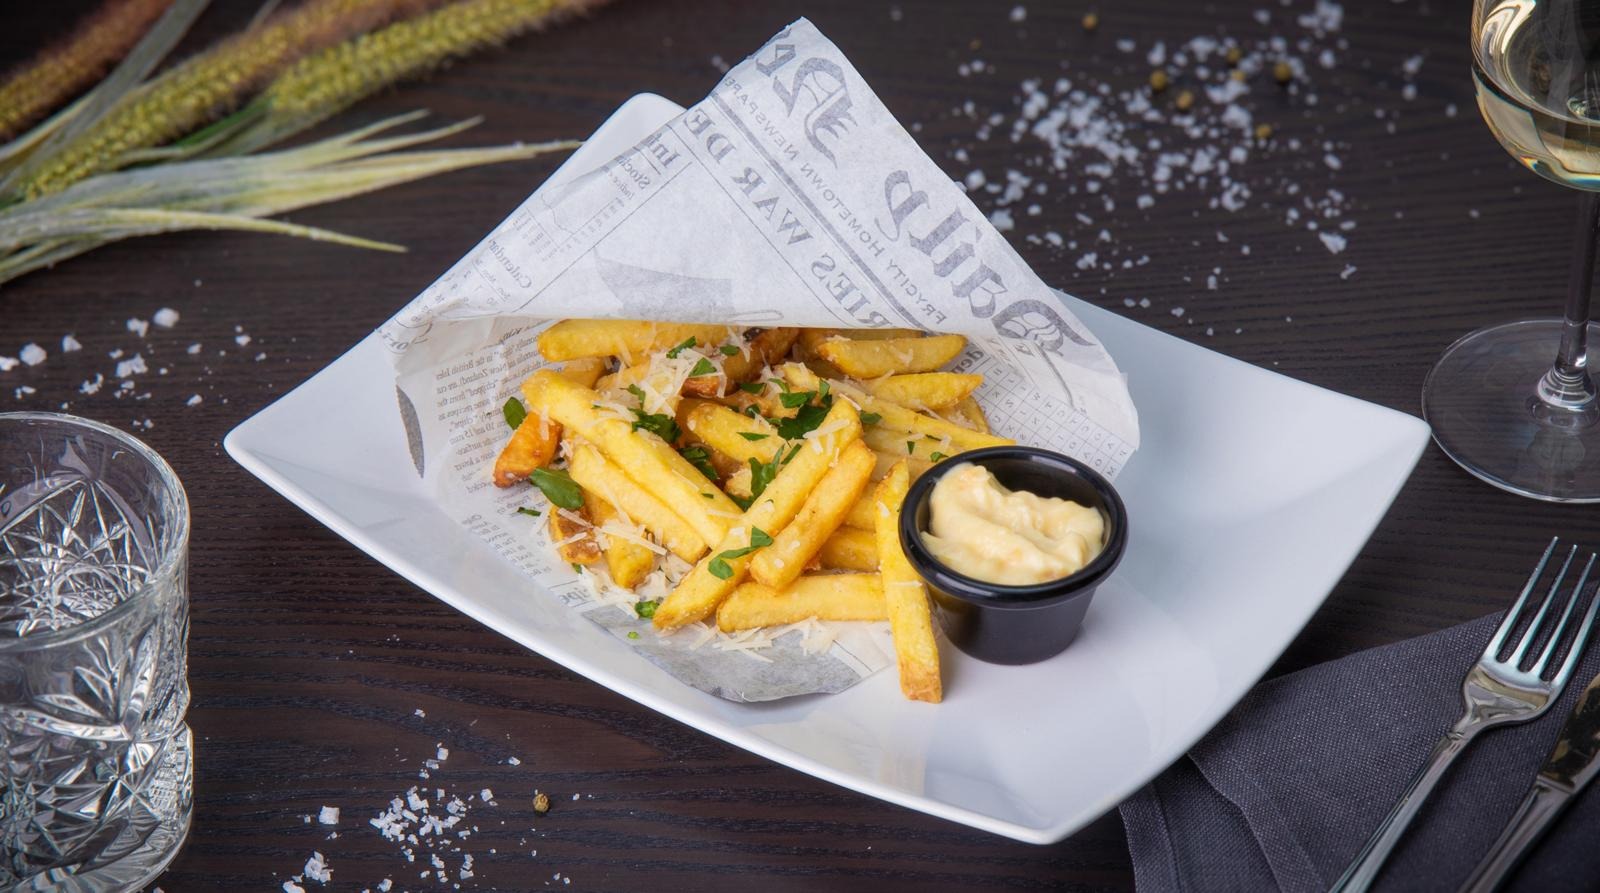 Mustakari’s country fries with Parmesan cheese and lemon aioli